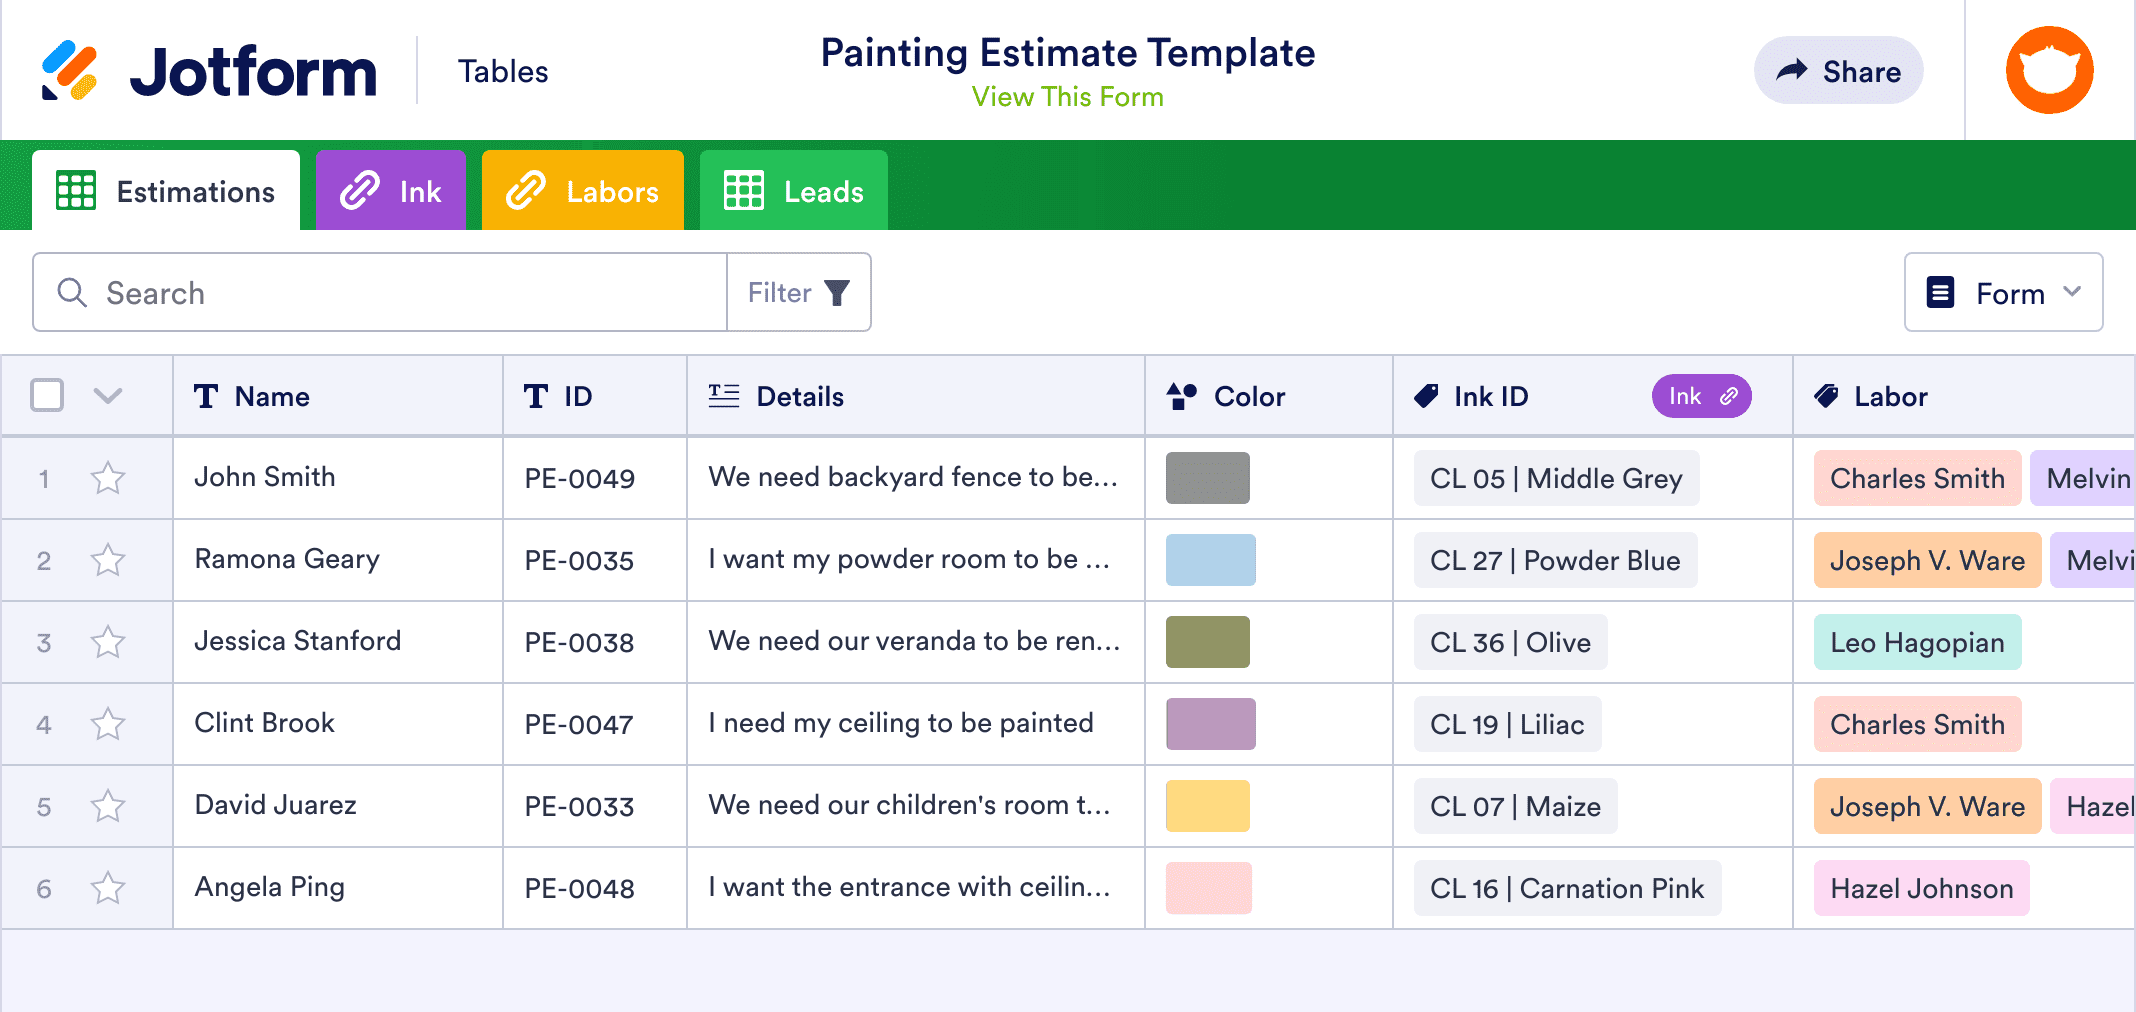 Painting Estimate Template